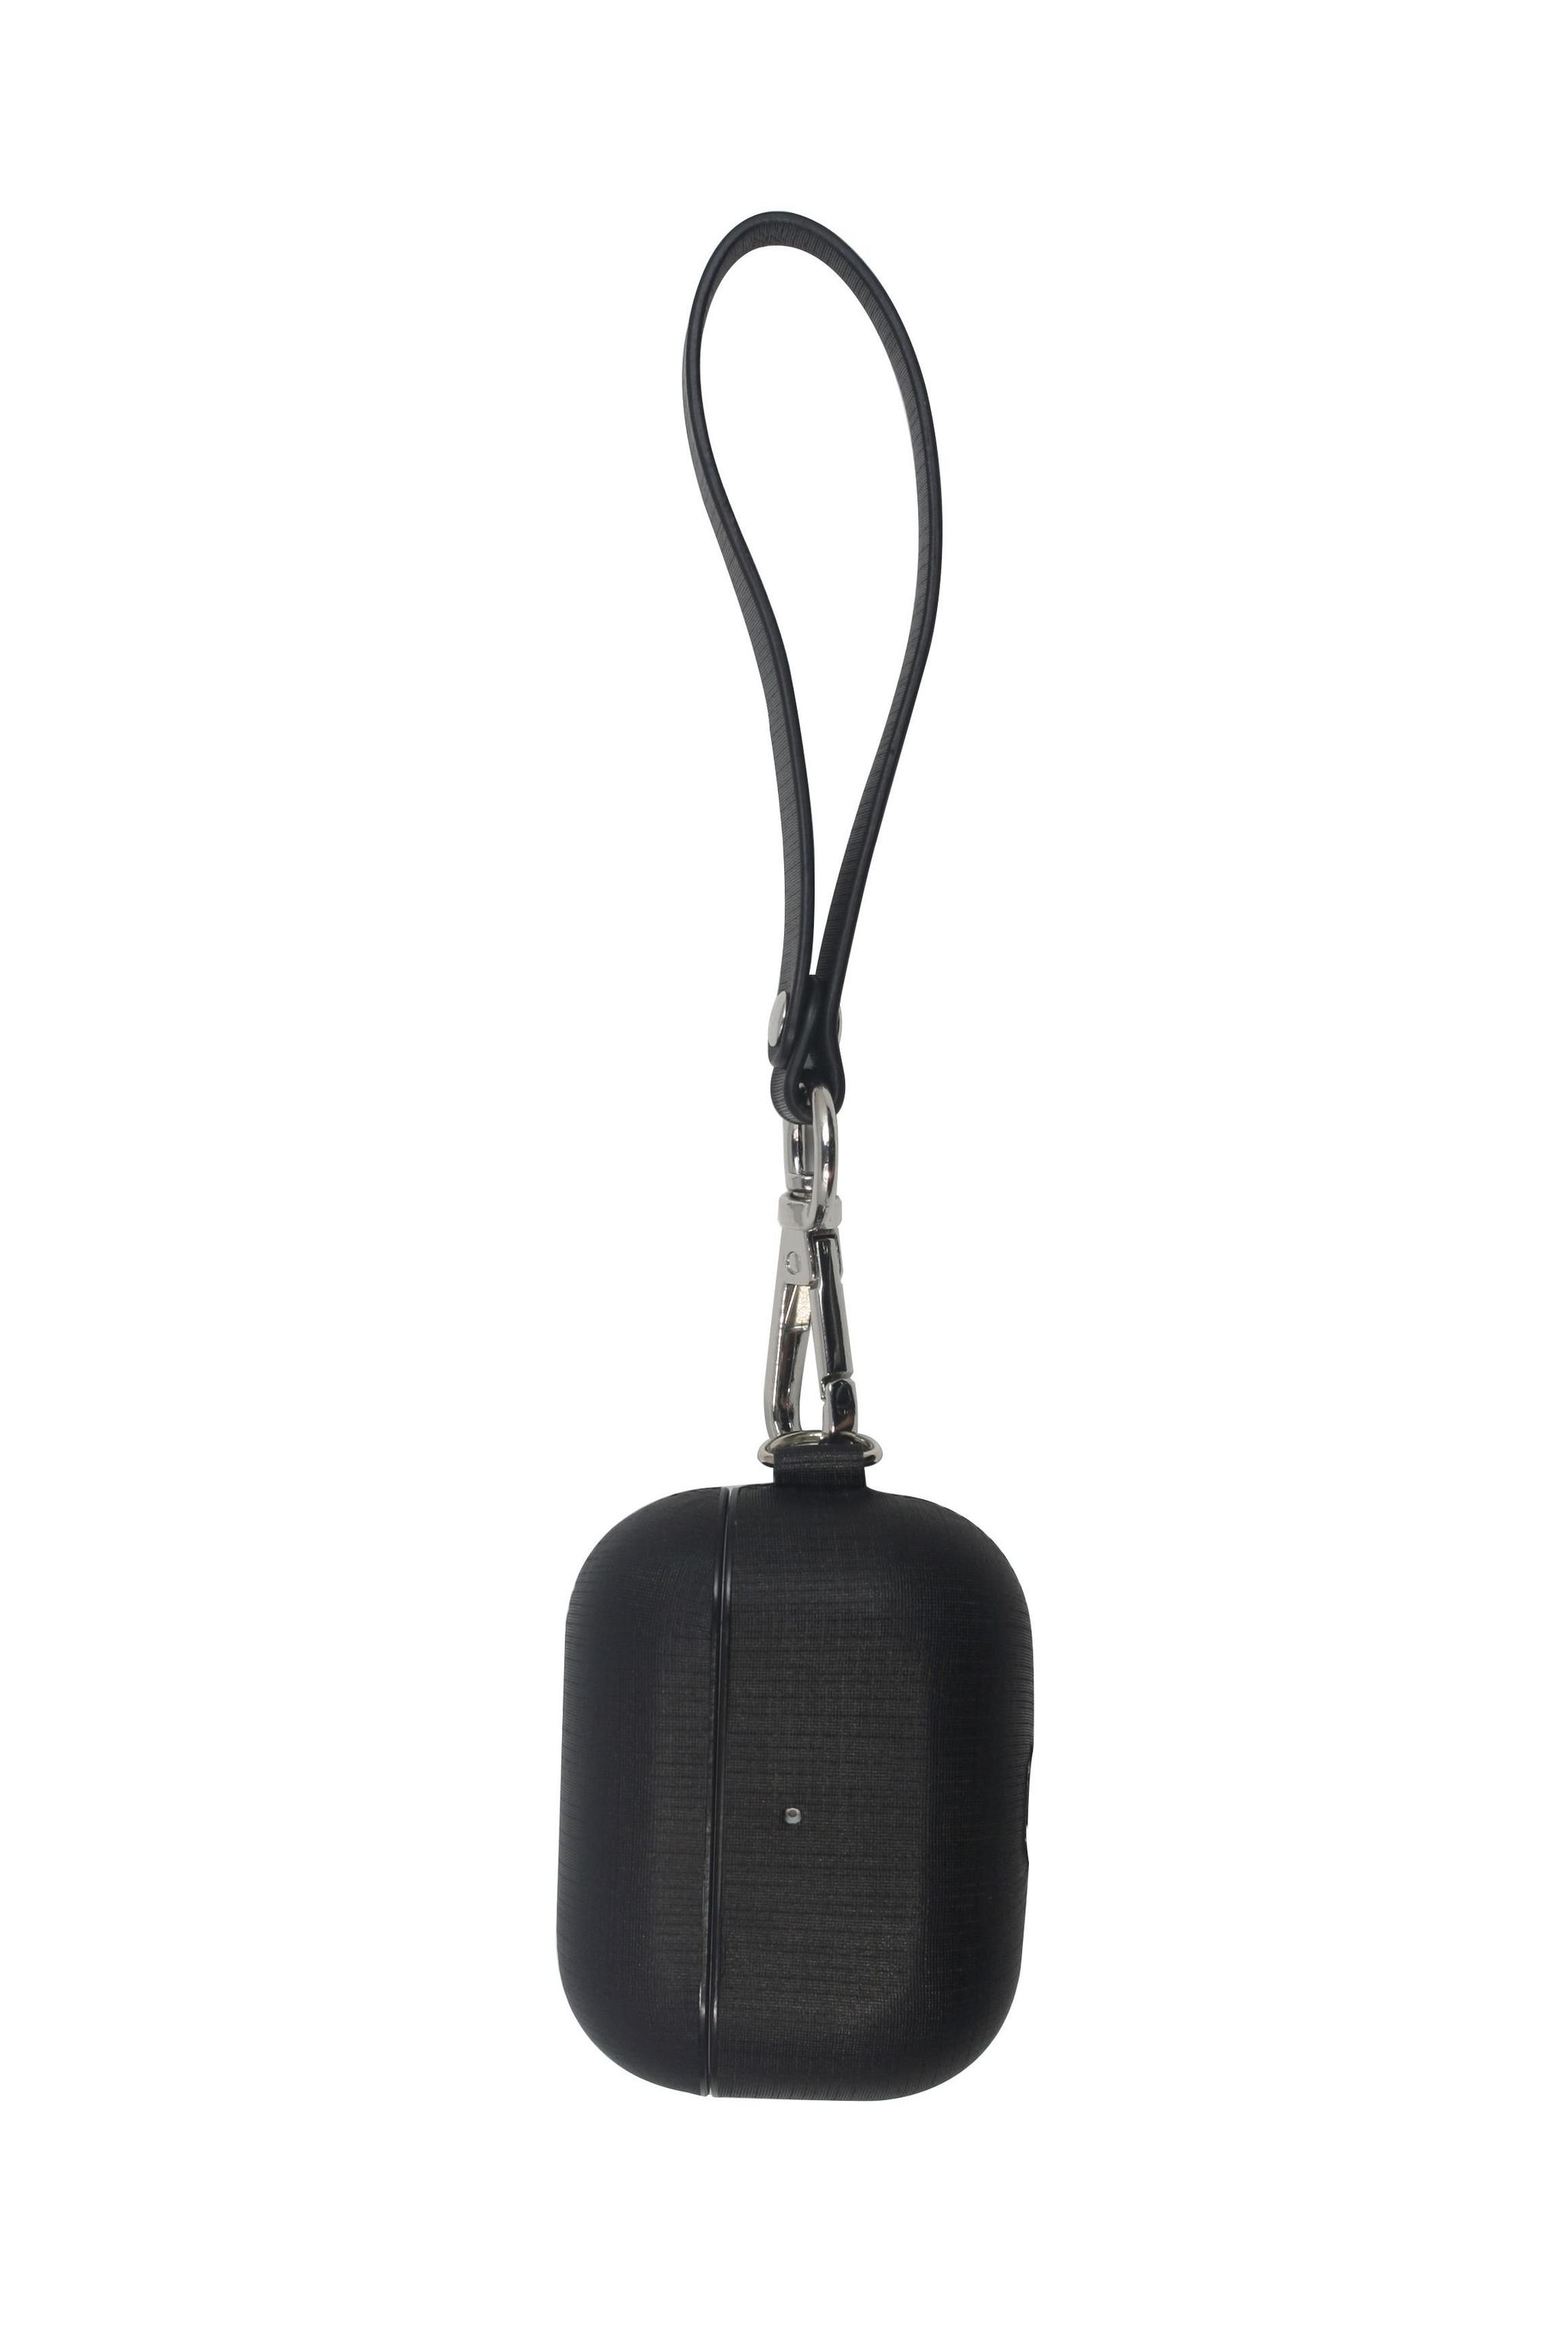 EQ Handy Airpods Pro Case - Black